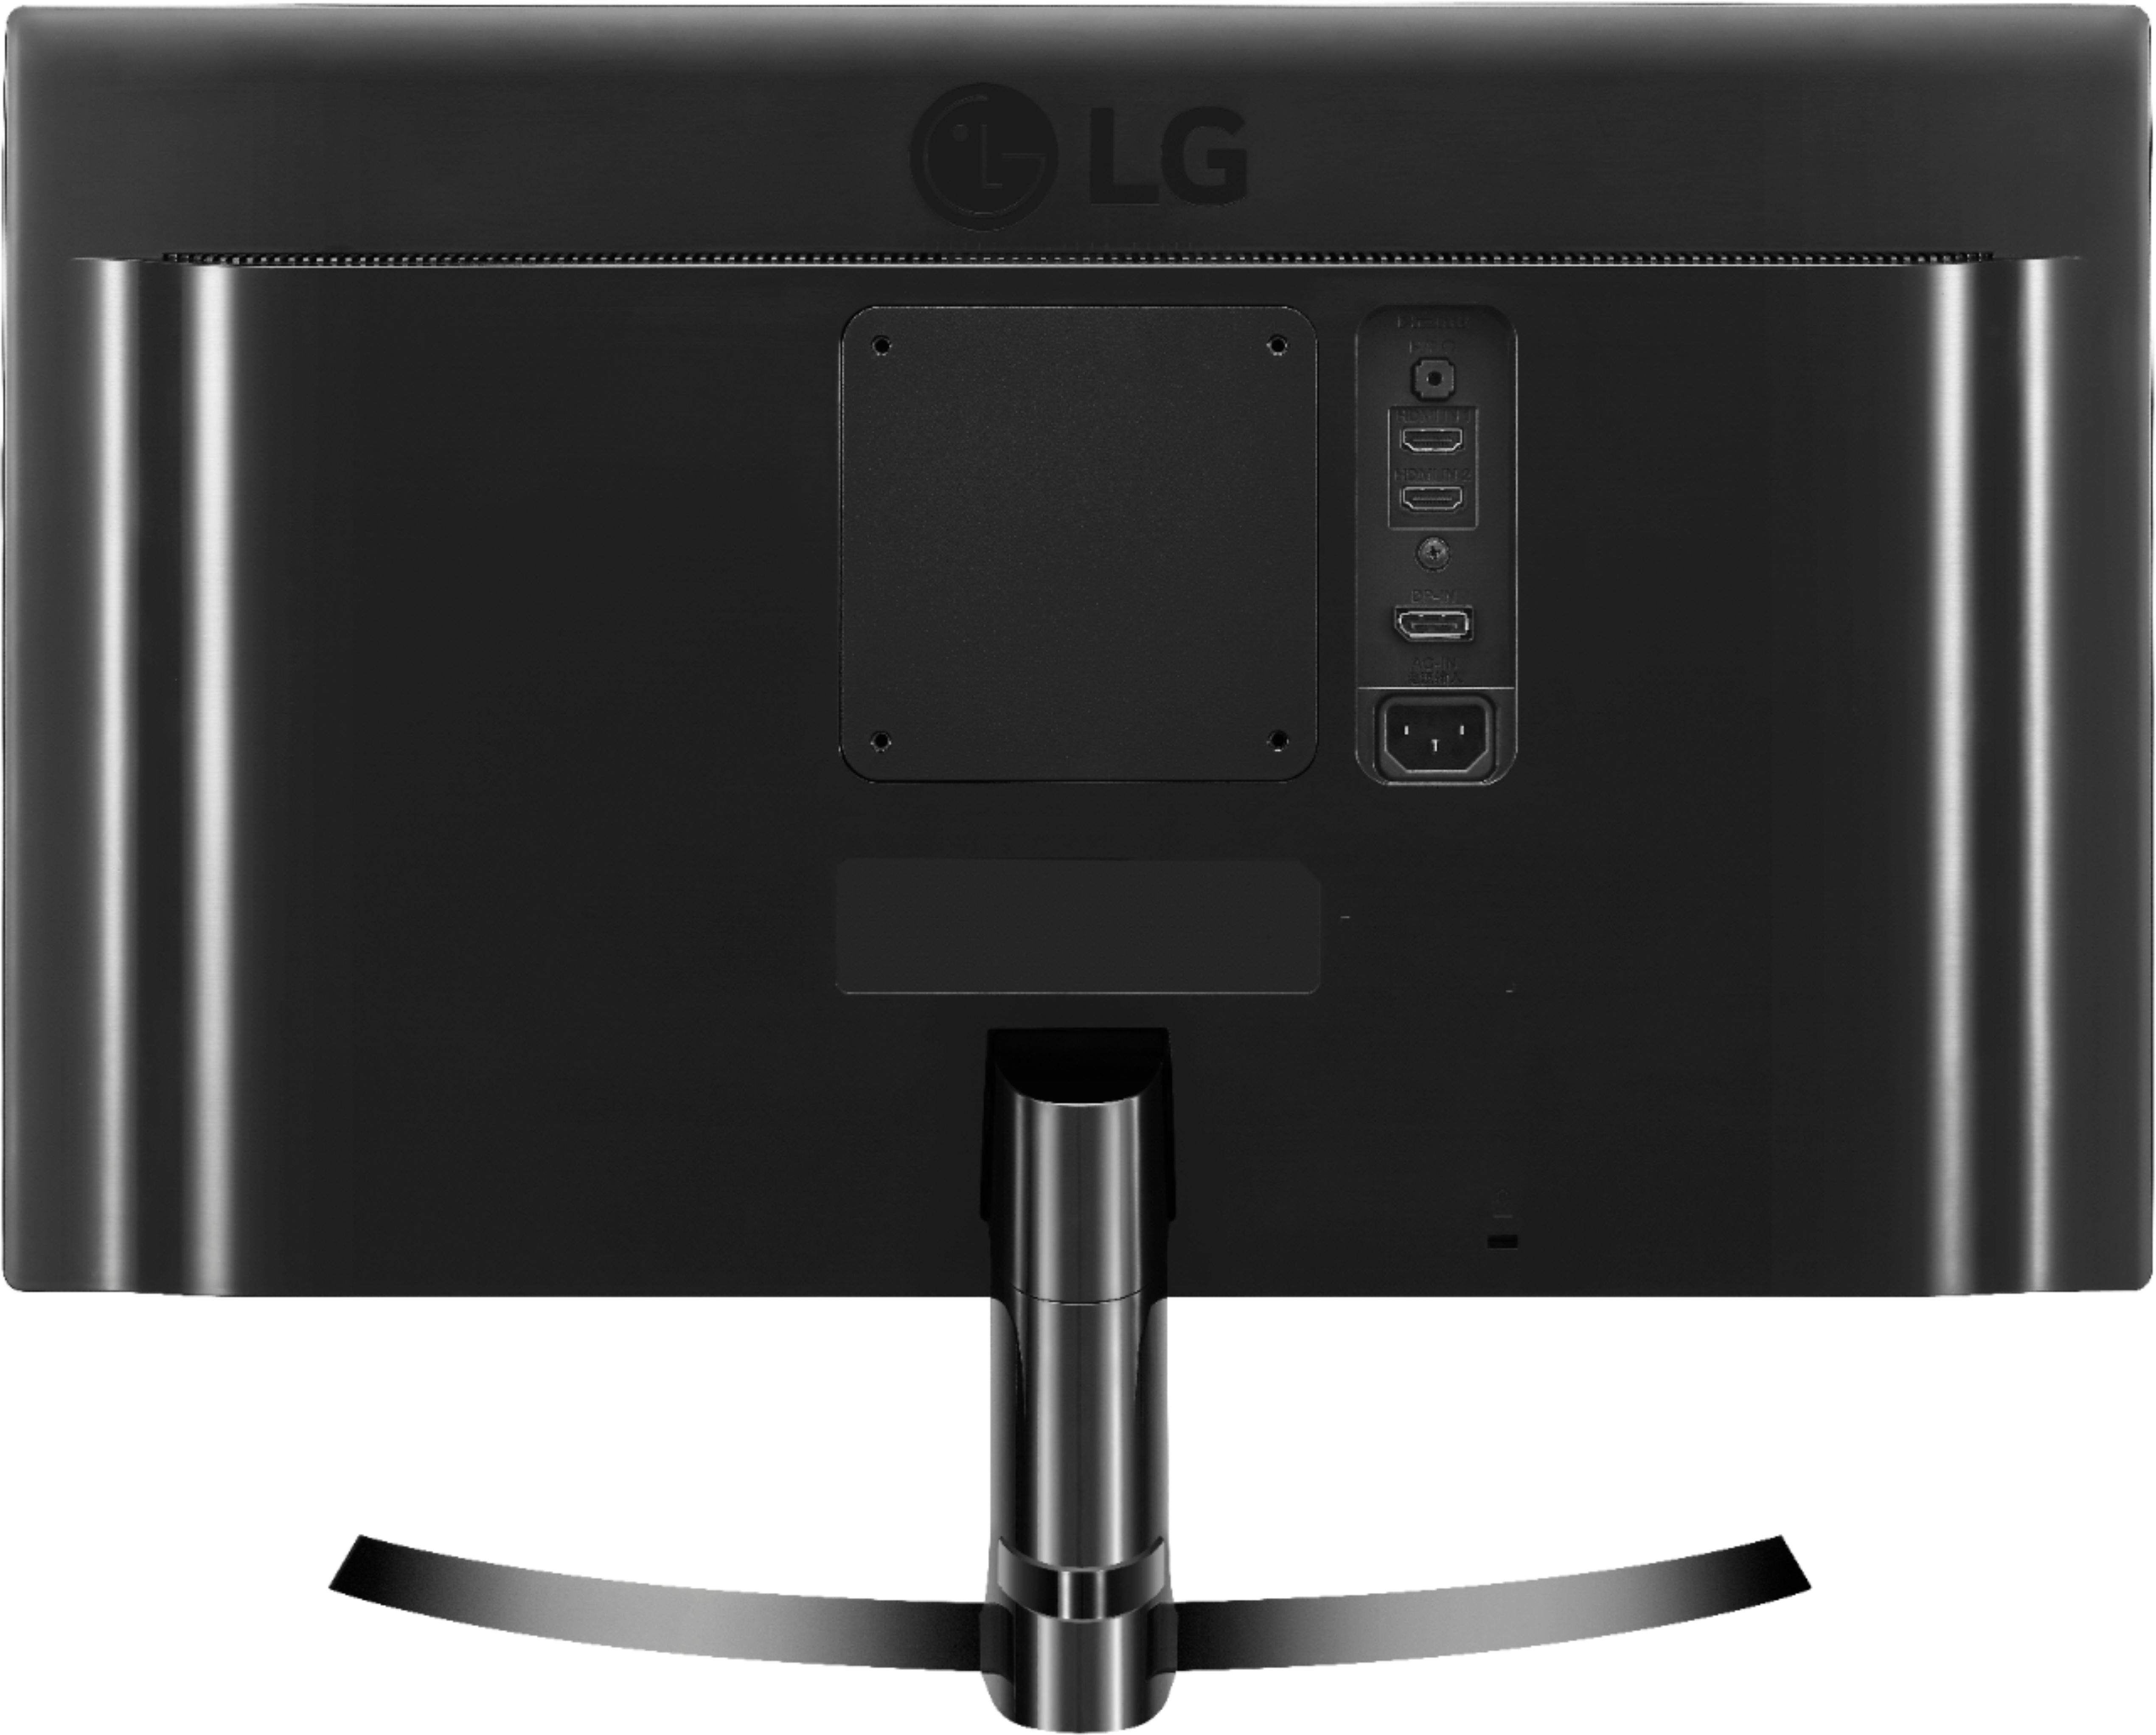 Back View: LG - 24" IPS LED 4K UHD FreeSync Monitor (HDMI, Display Port) - Black